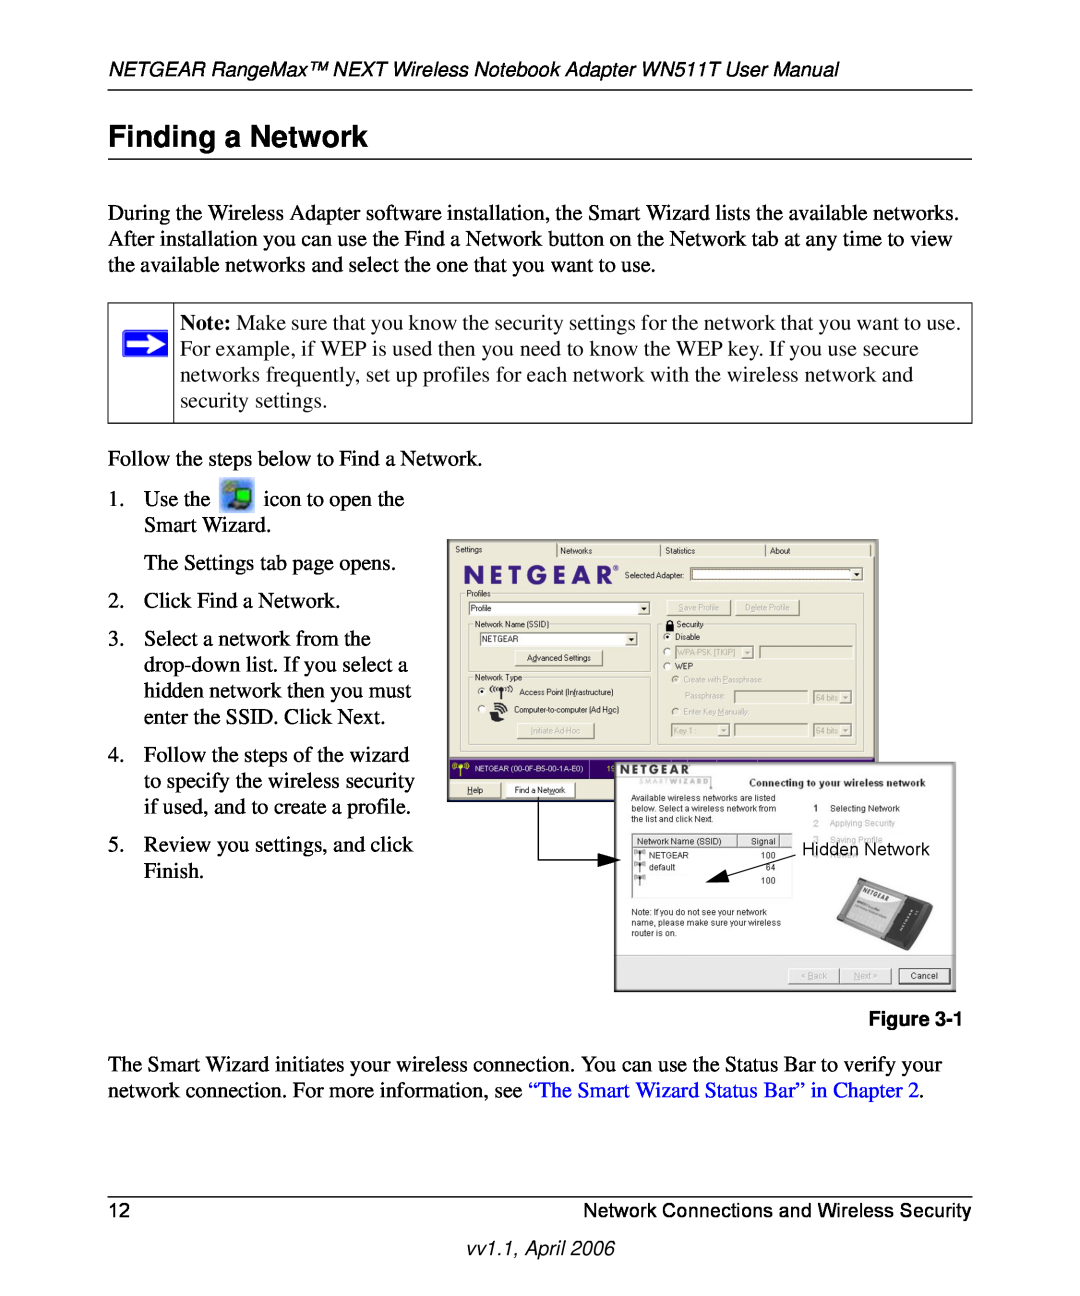 NETGEAR WN511T user manual Finding a Network 